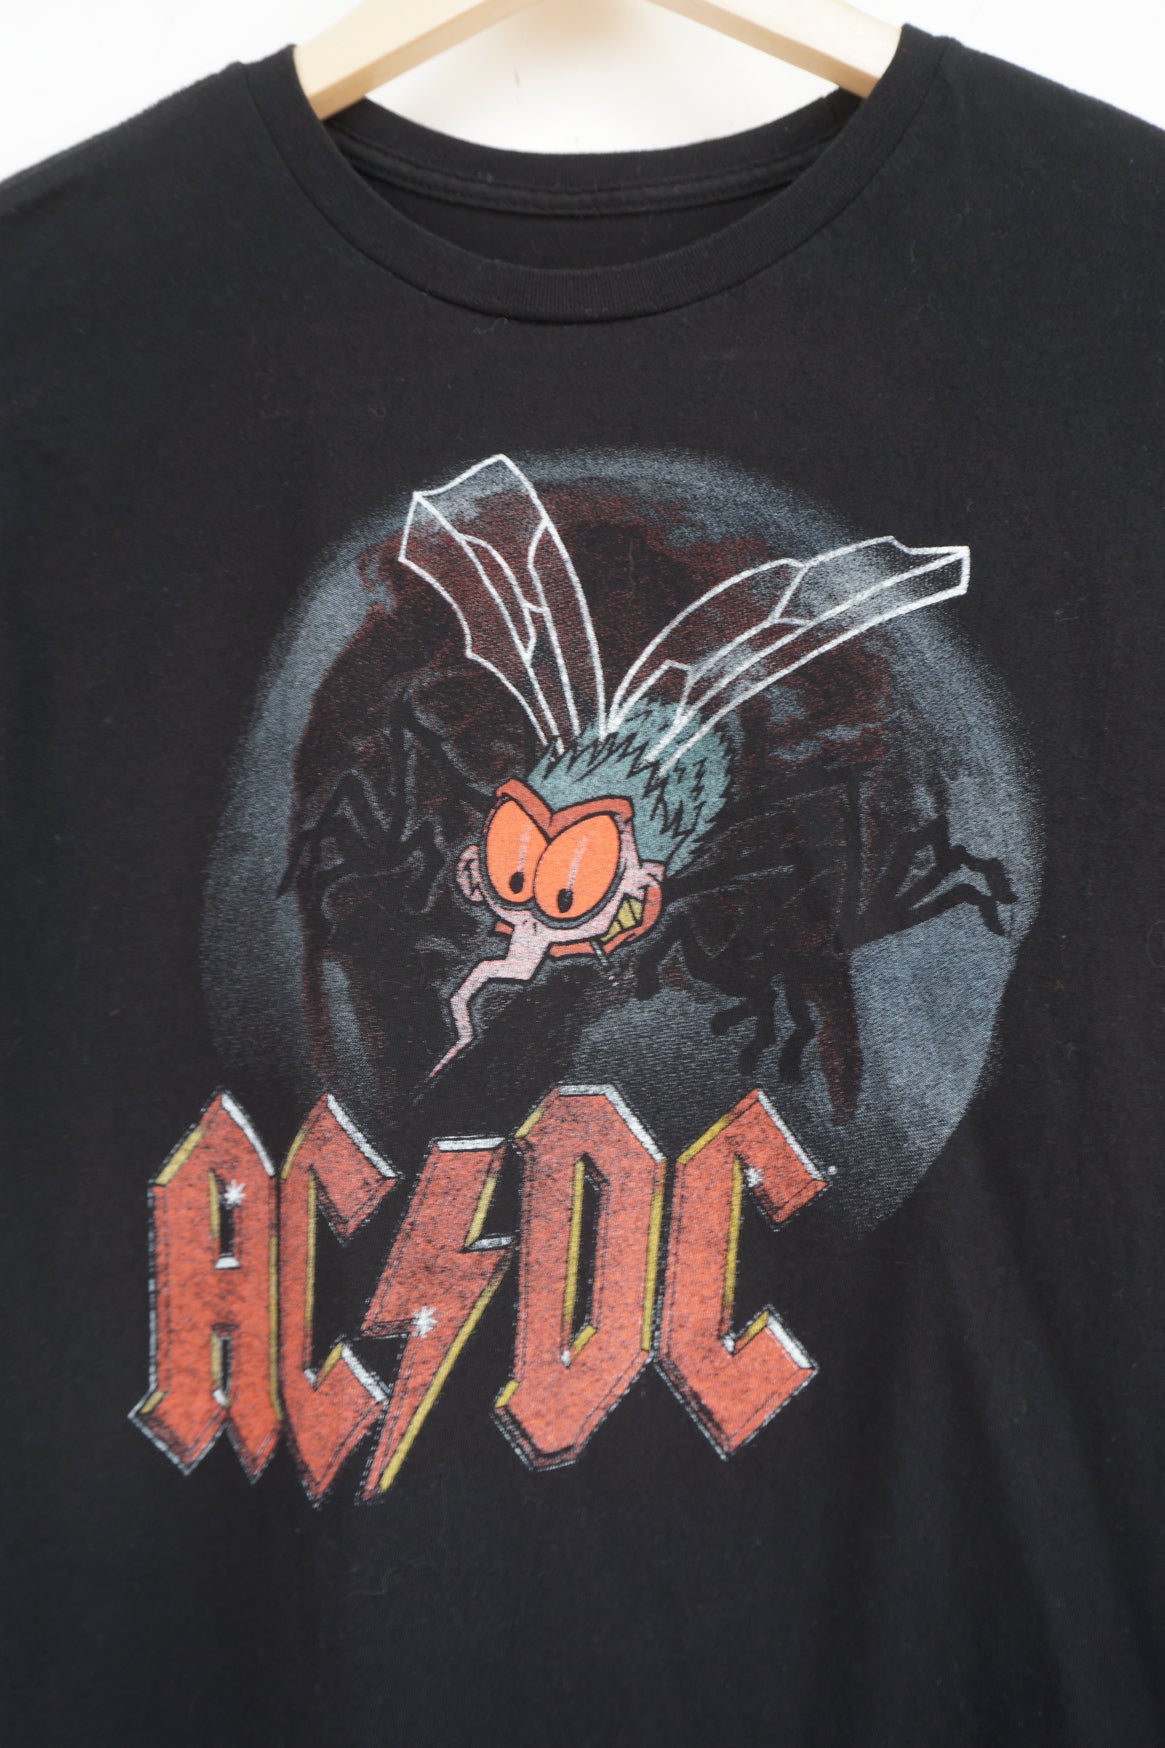 – ACDC T-Shirt VintageFolk